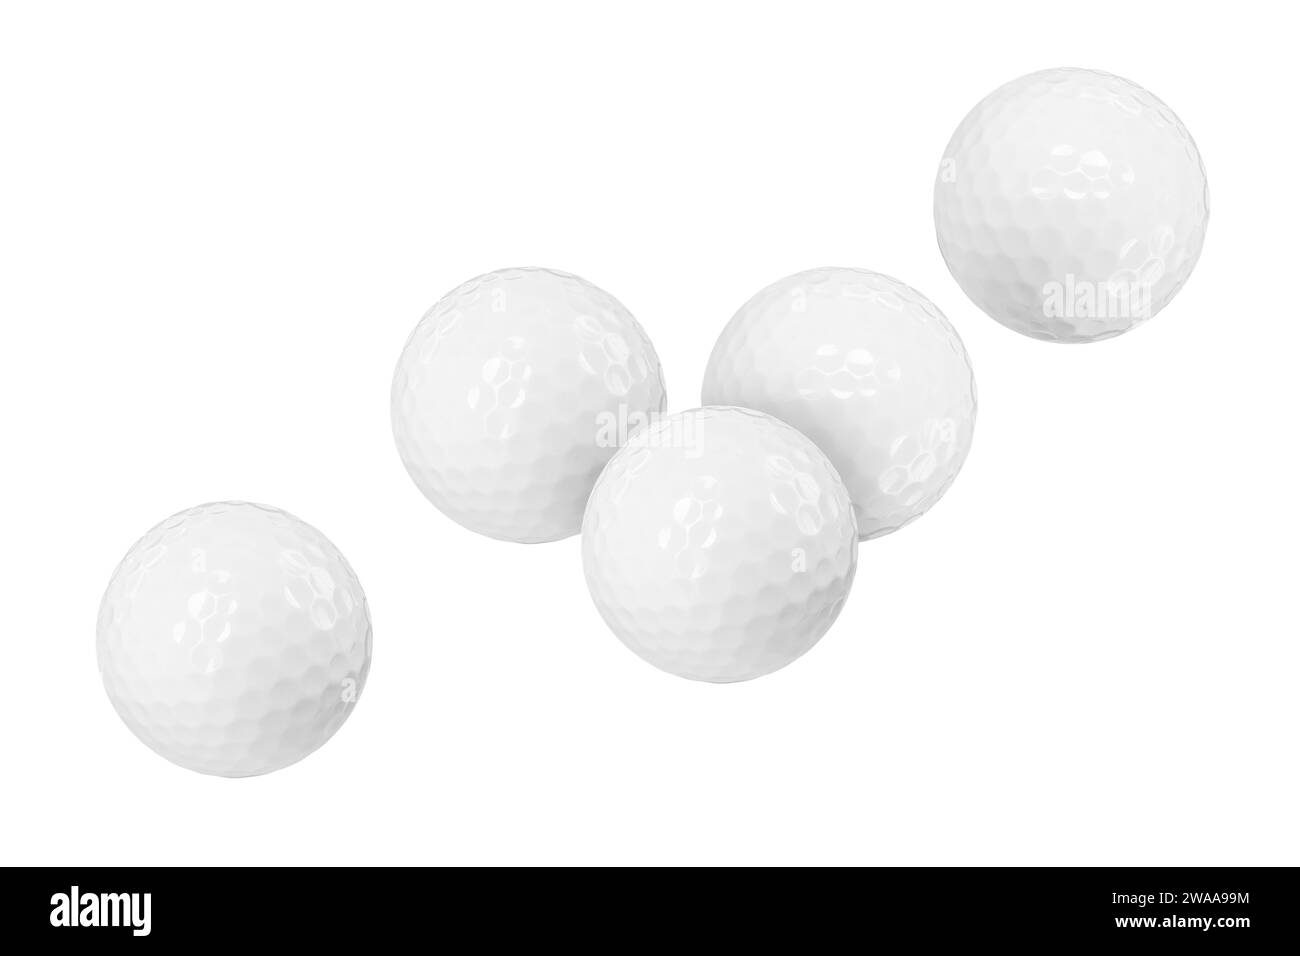 Many golf balls flying on white background Stock Photo